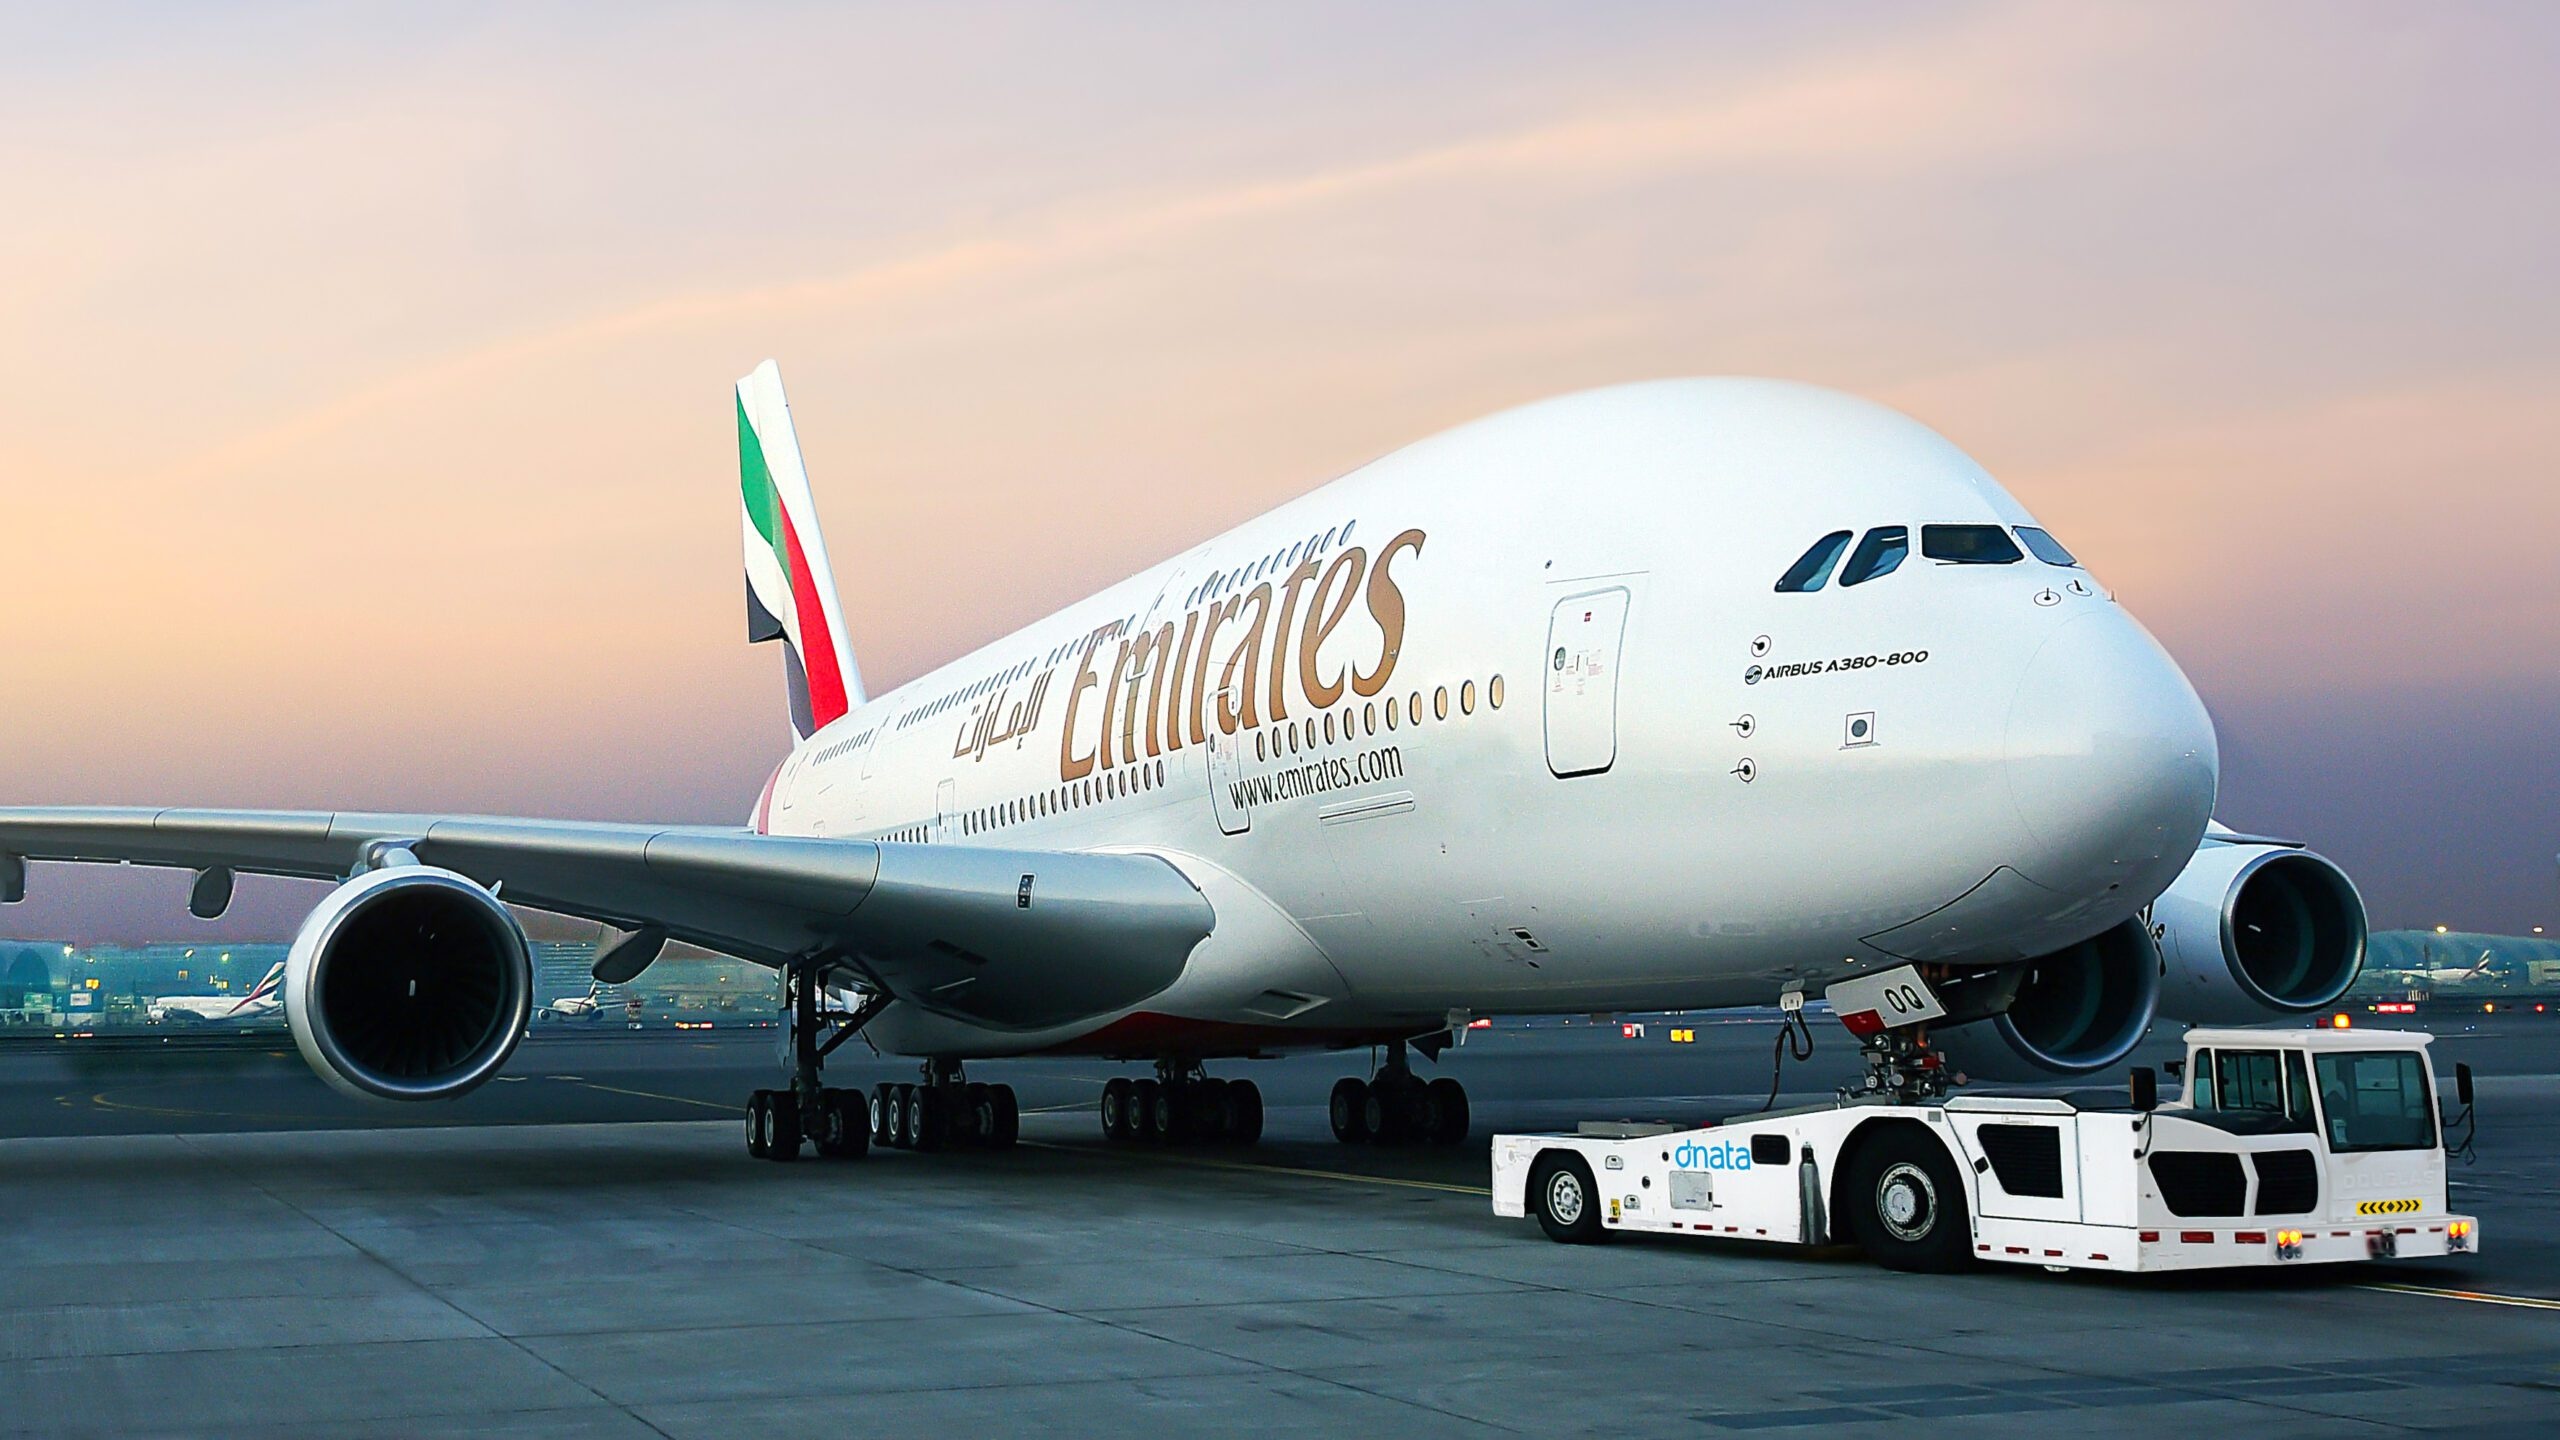 Emirates financial loss, Aviation industry challenges, Market analysis, Business news, 2560x1440 HD Desktop